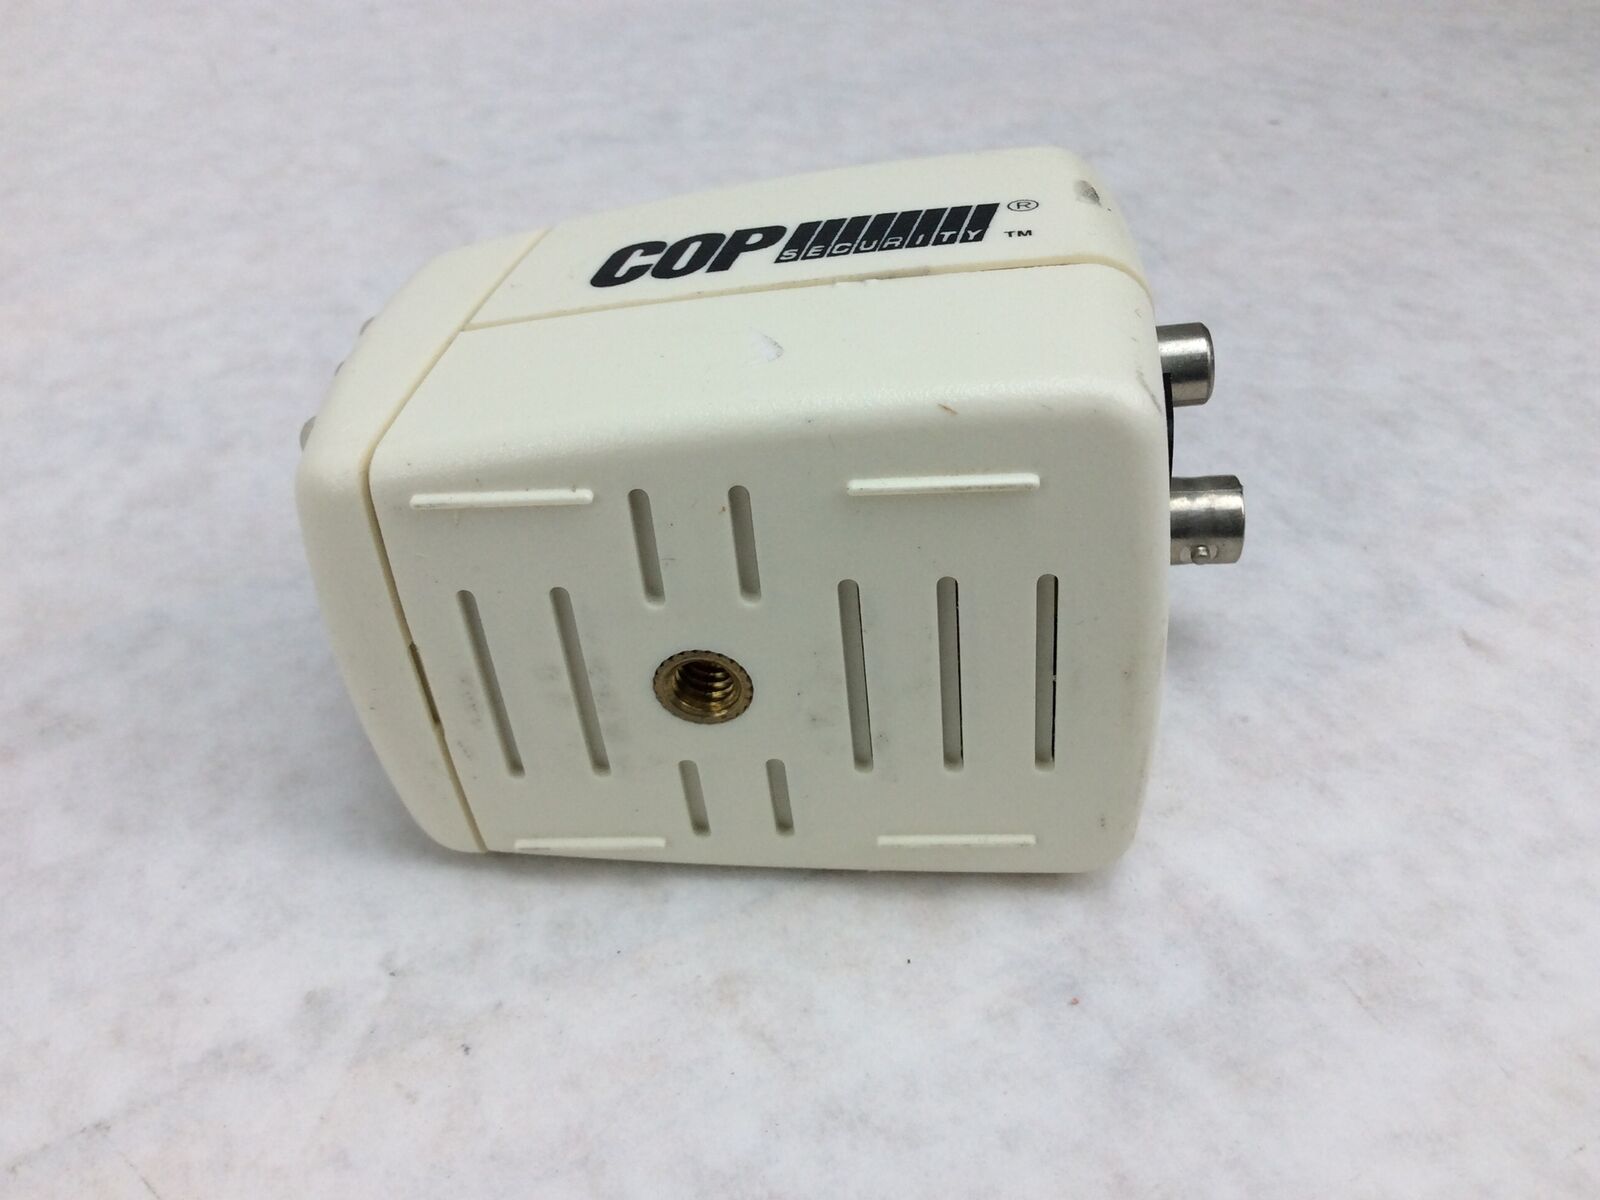 Cop Security CCD Camera Part Number 15-CJ31